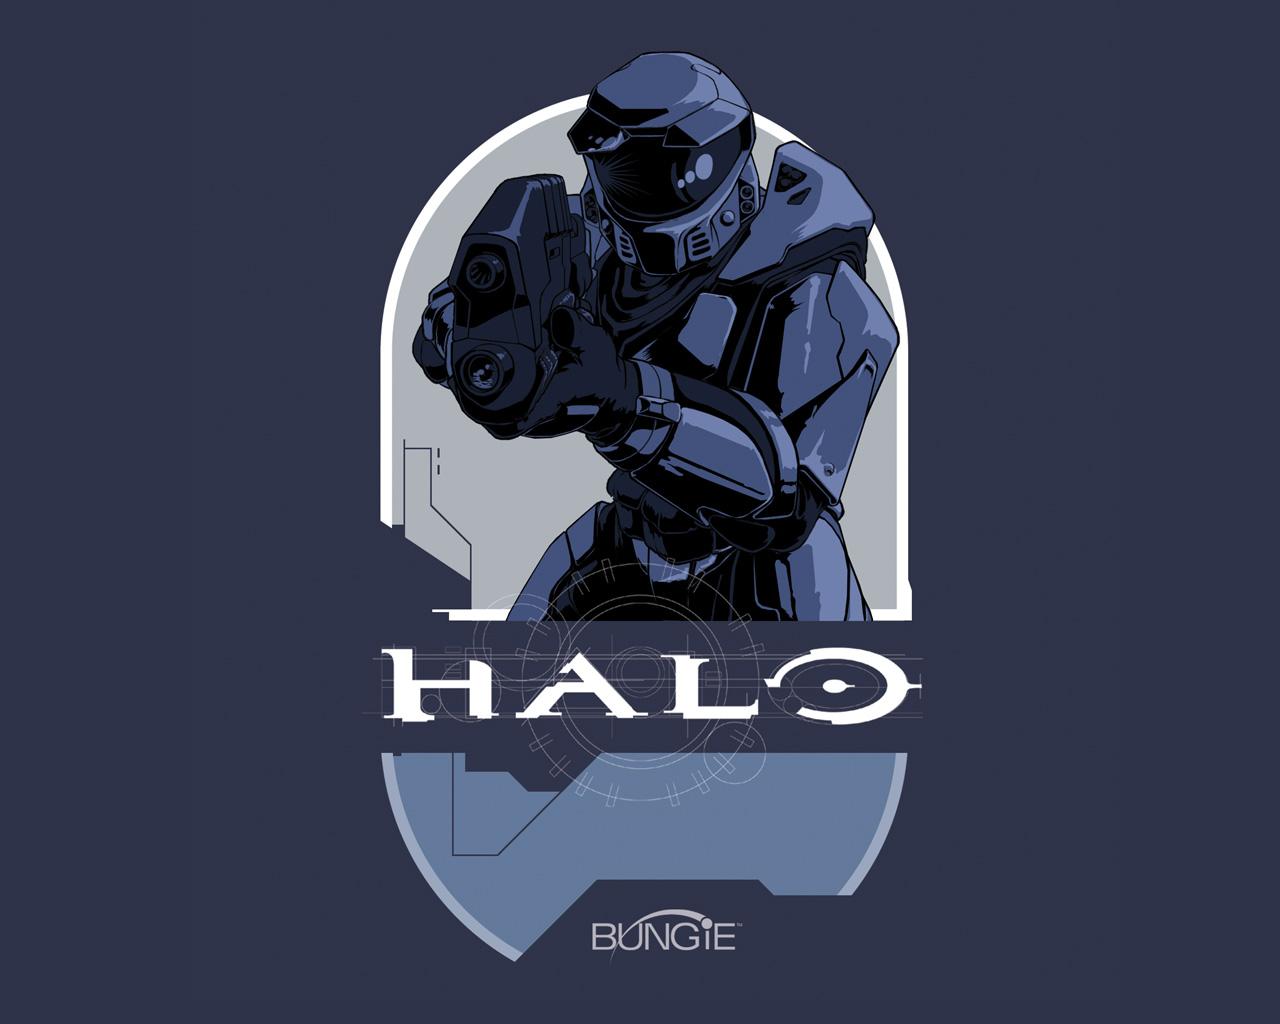 Halo Combat Evolved